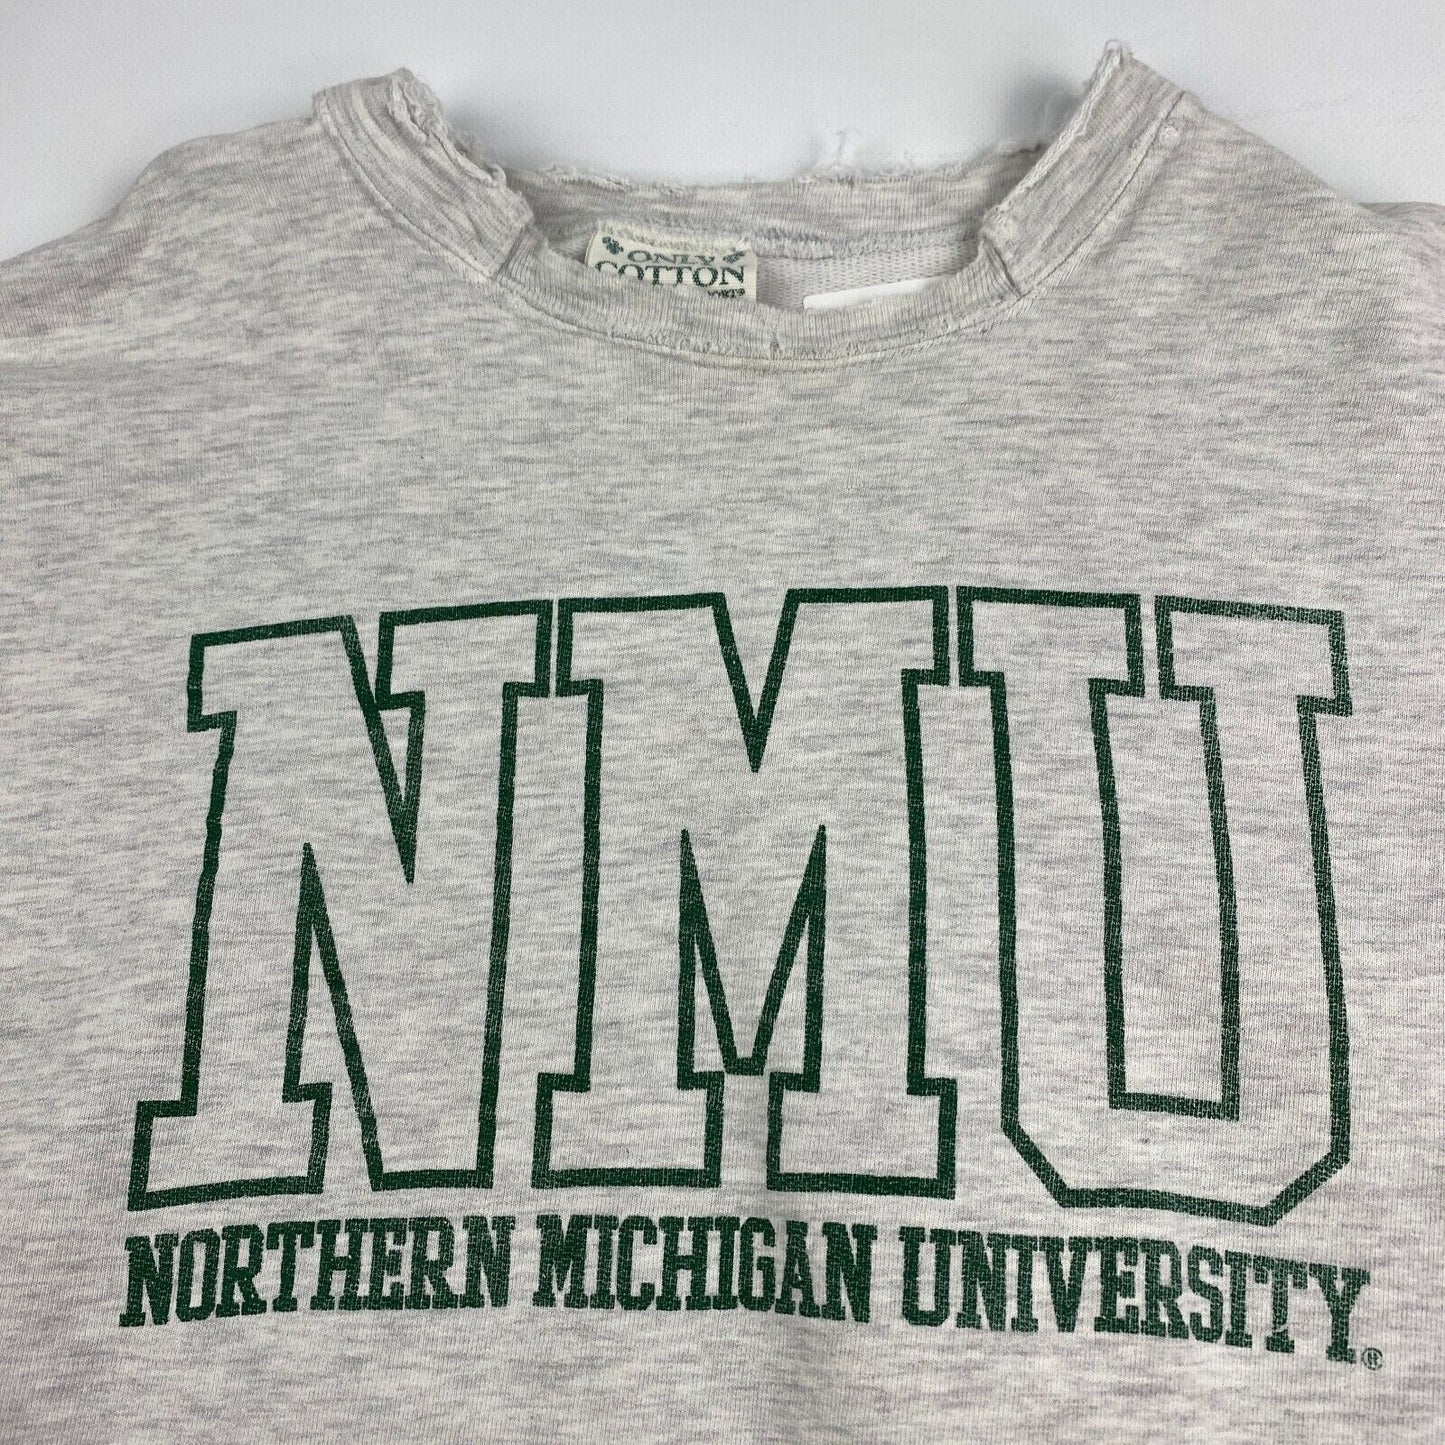 VINTAGE 90s Northern Michigan University Distressed Crewneck Sweater sz XXL Mens